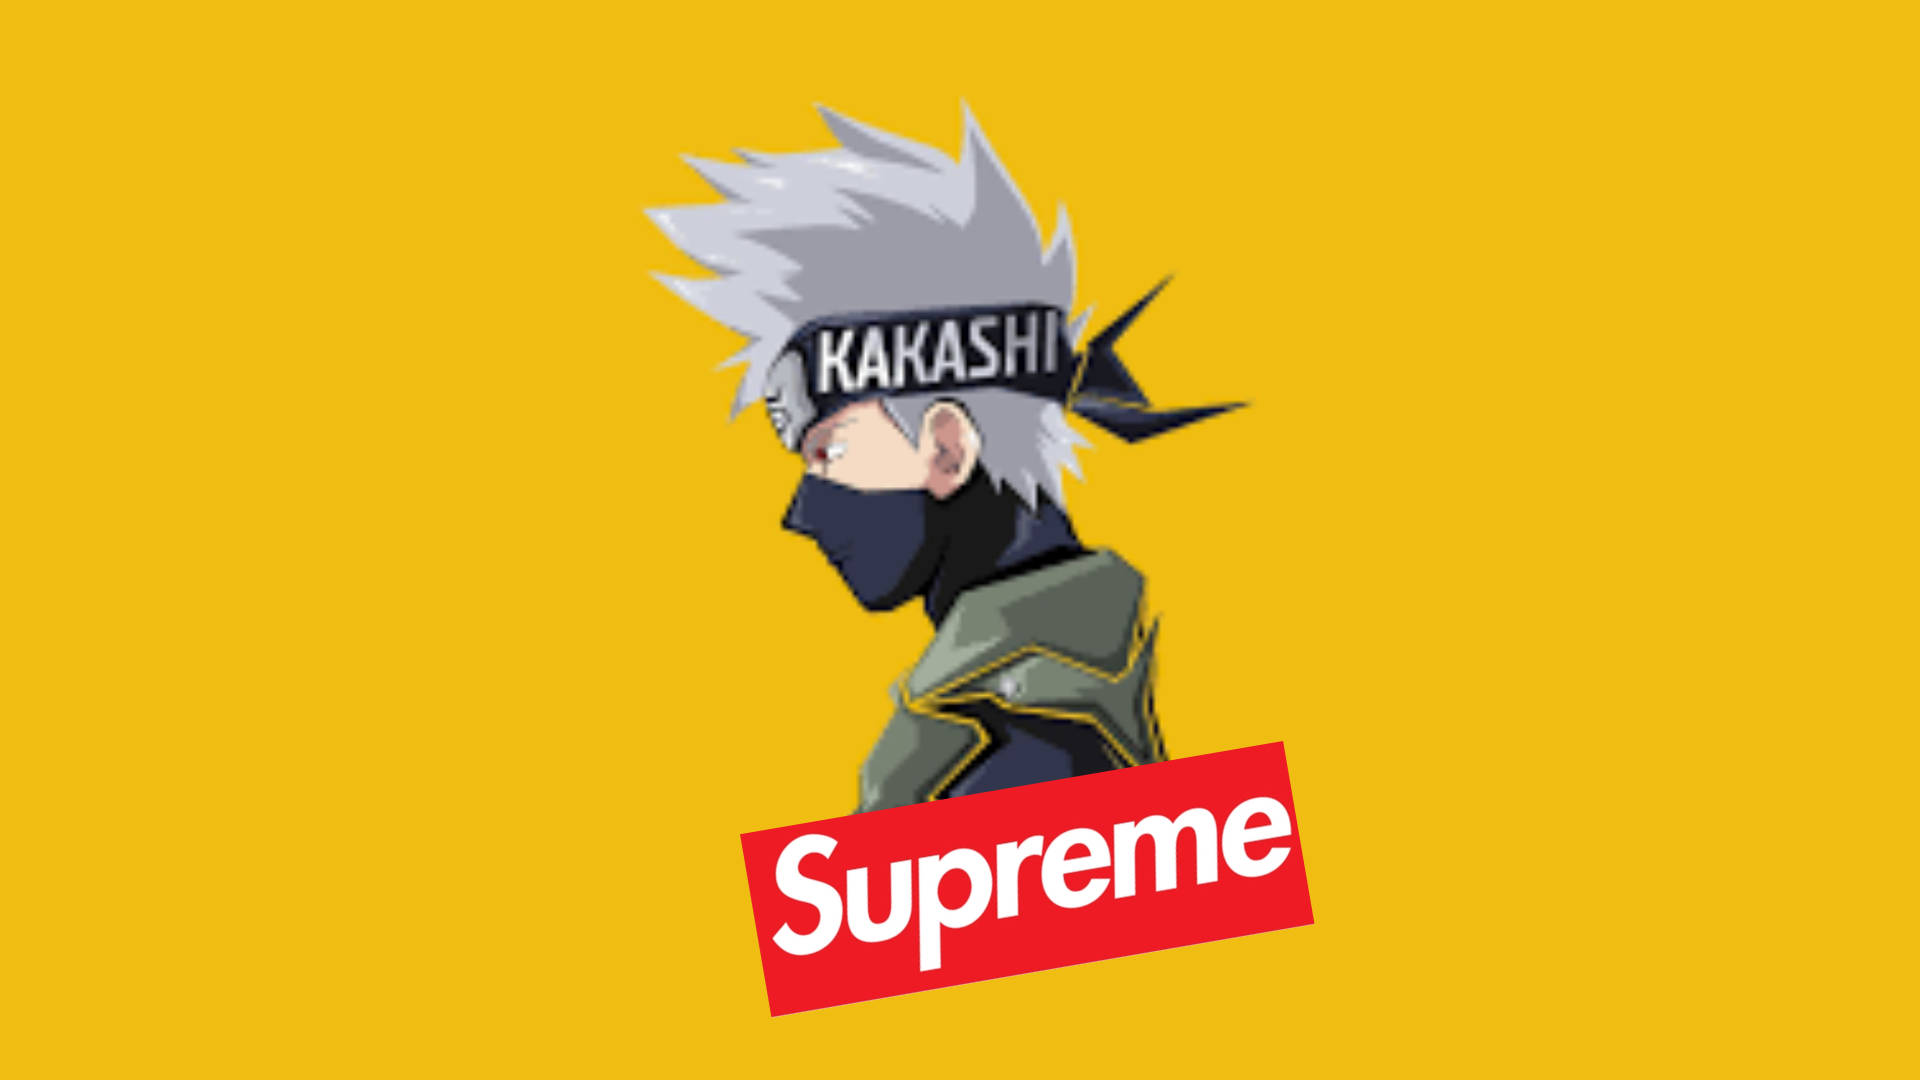  Kakashi Wallpaper HD Backgrounds Supreme APK for Android Download